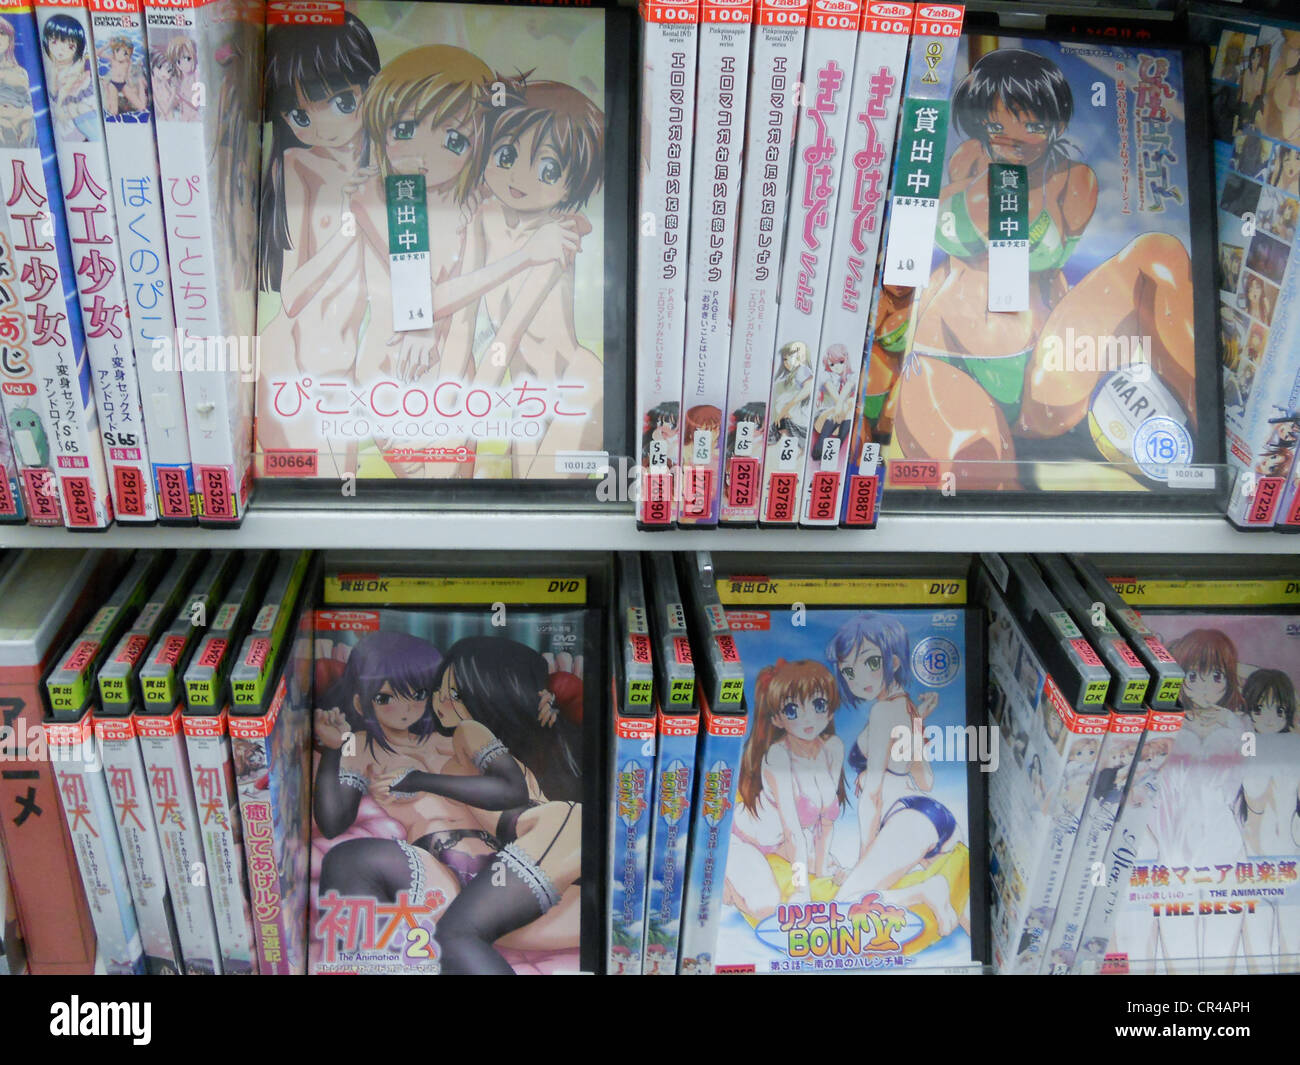 Japan Porn Dvd 72